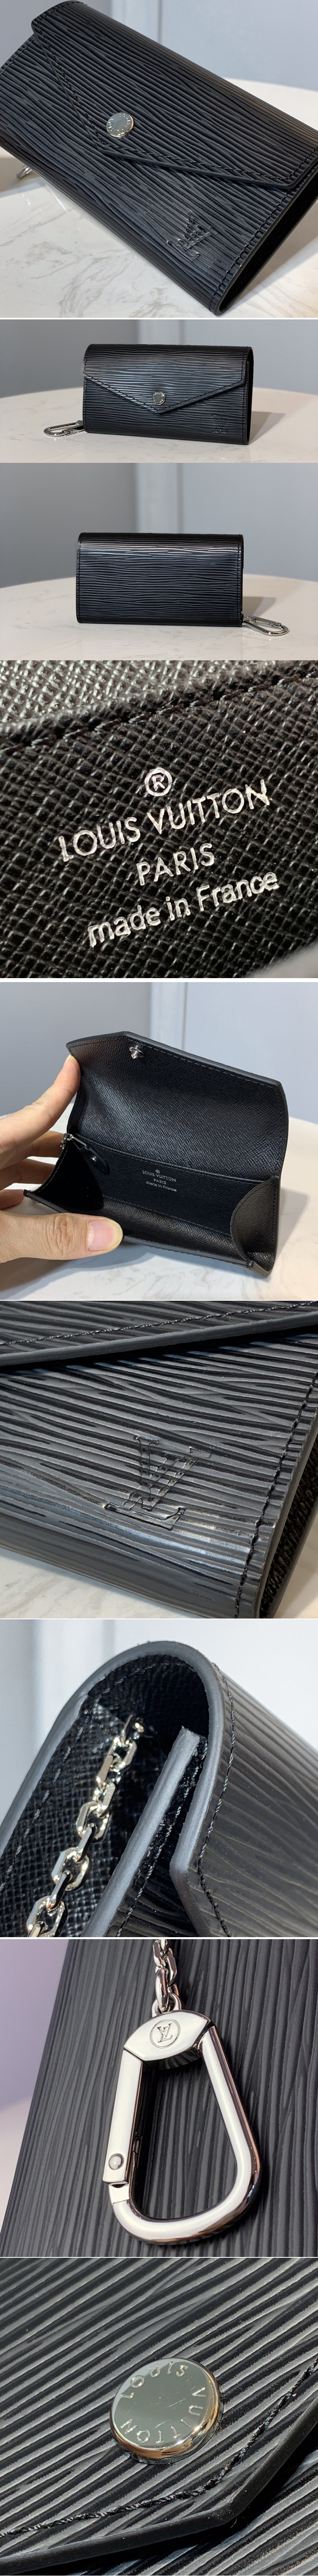 Replica Louis Vuitton M56245 LV Key Pouch in Black Epi leather